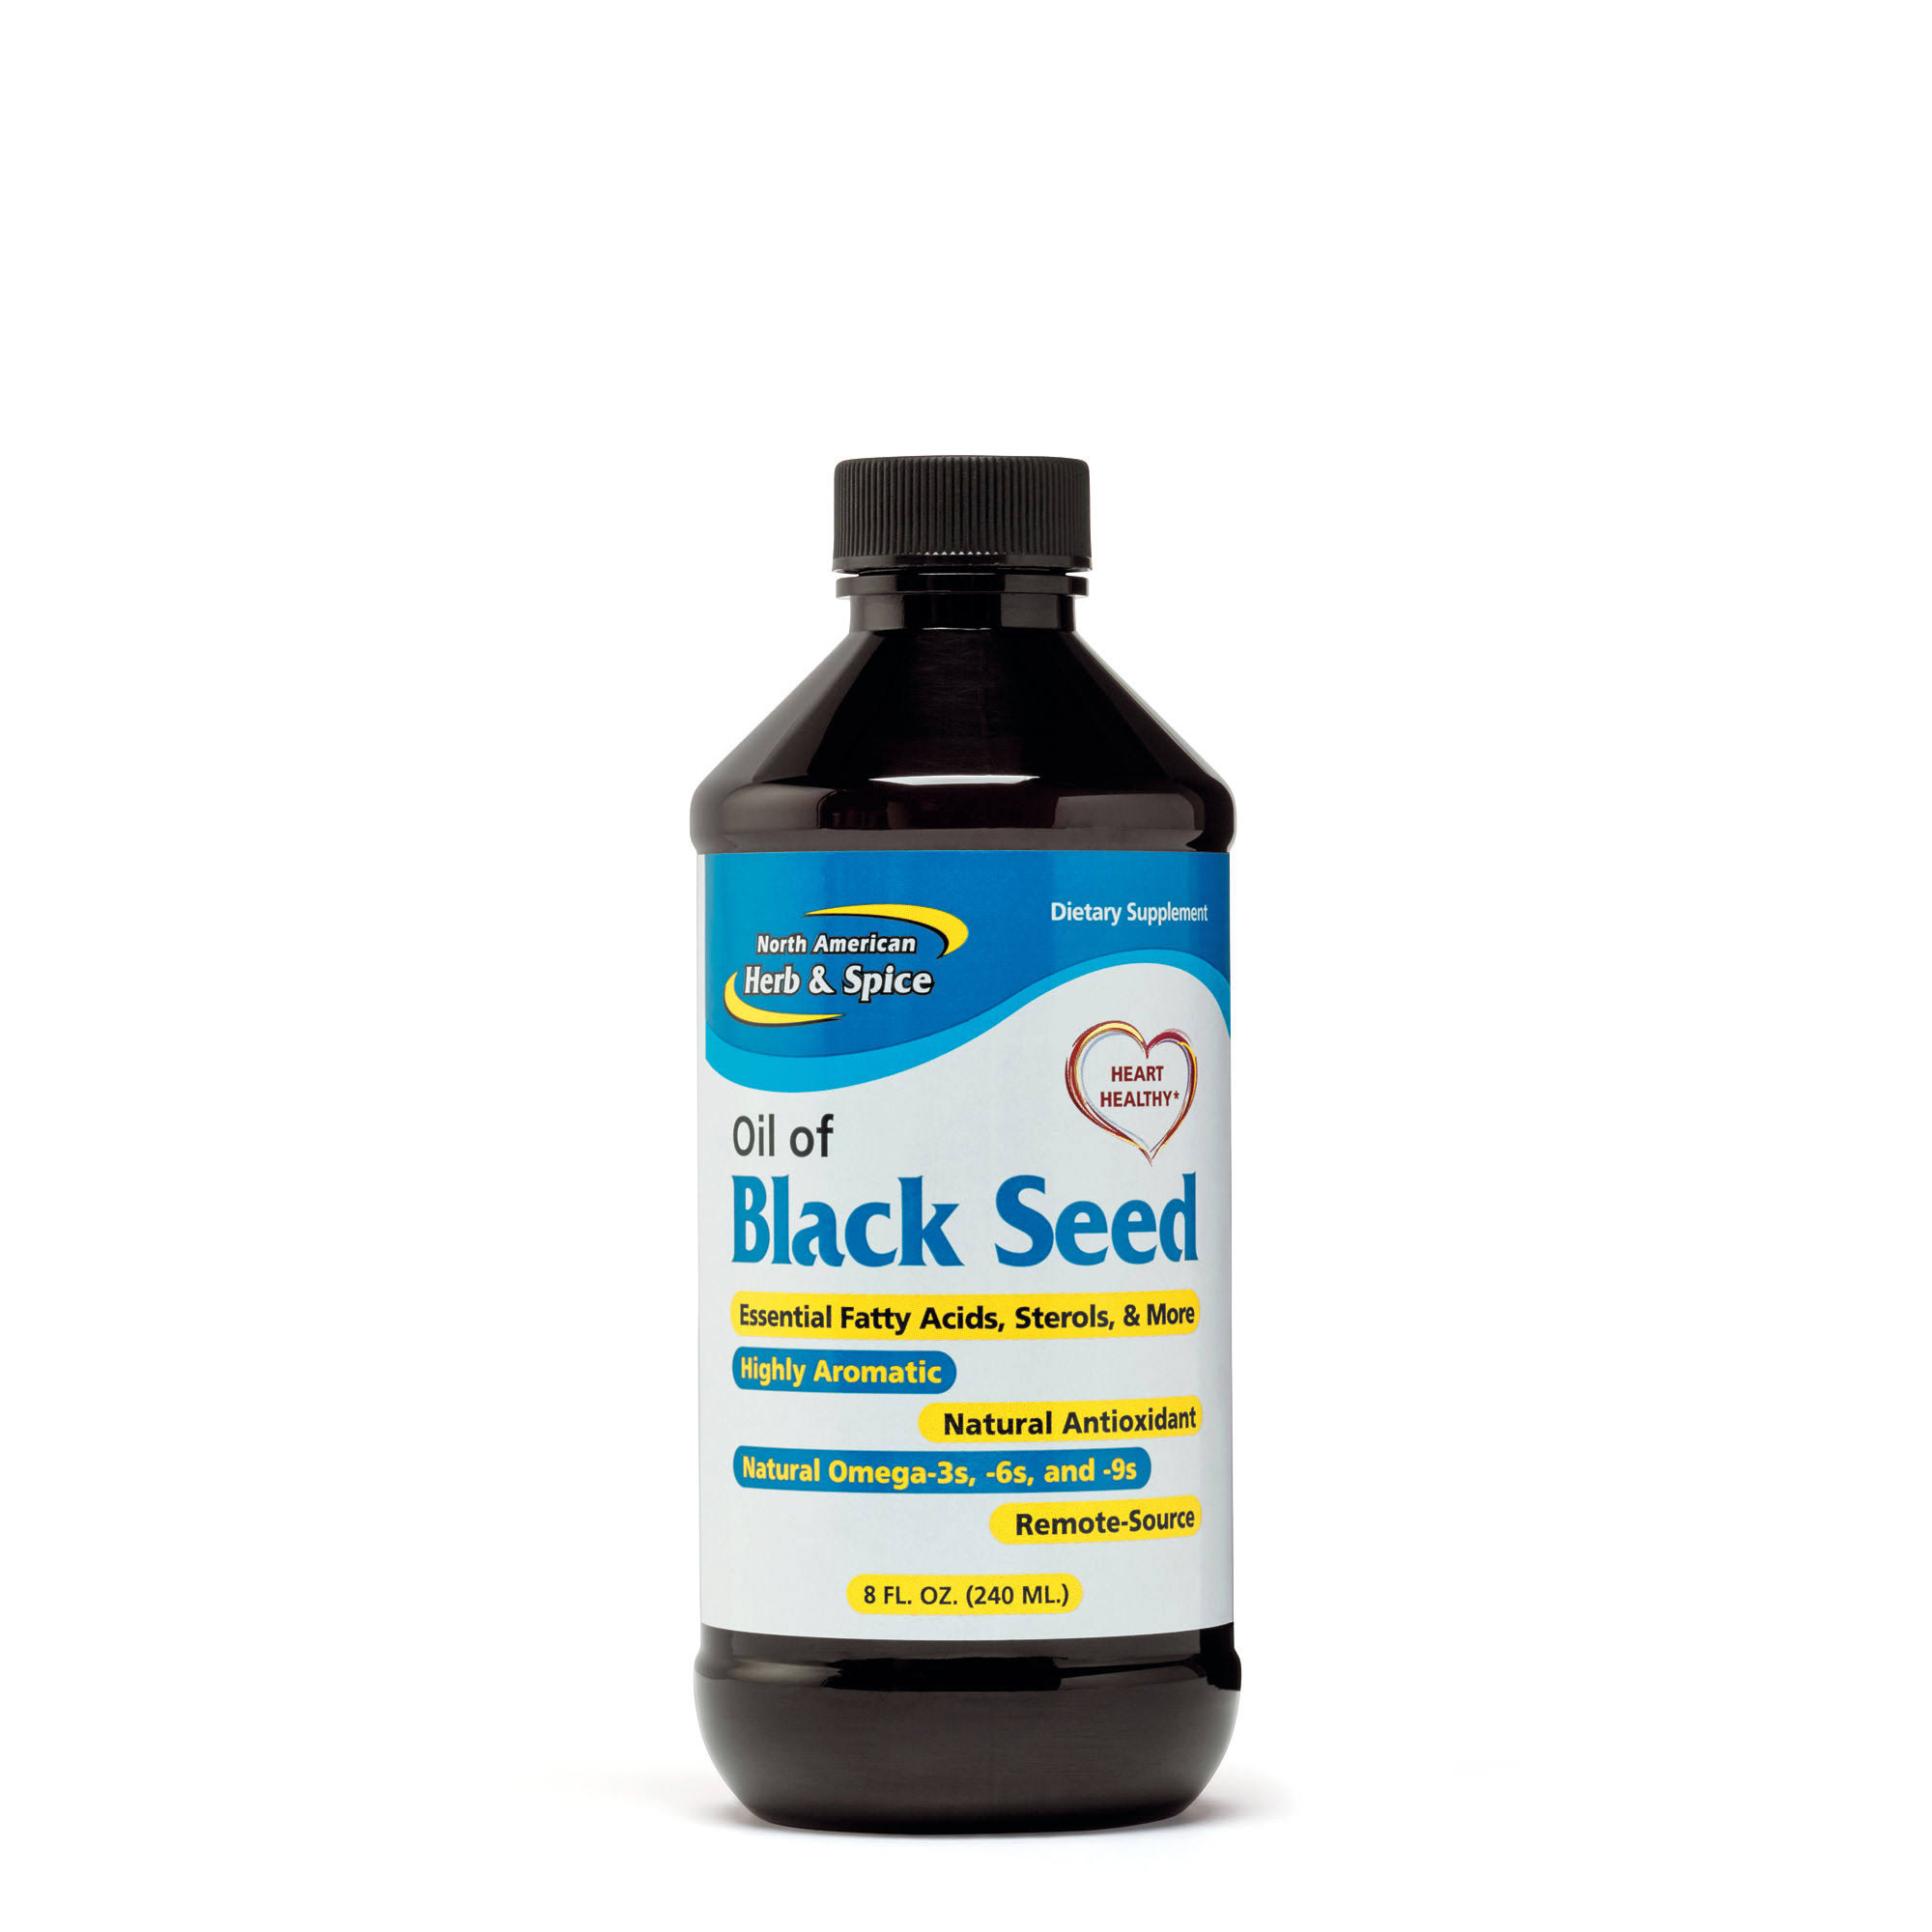 North American Herb & Spice Company Black Seed - 240ml